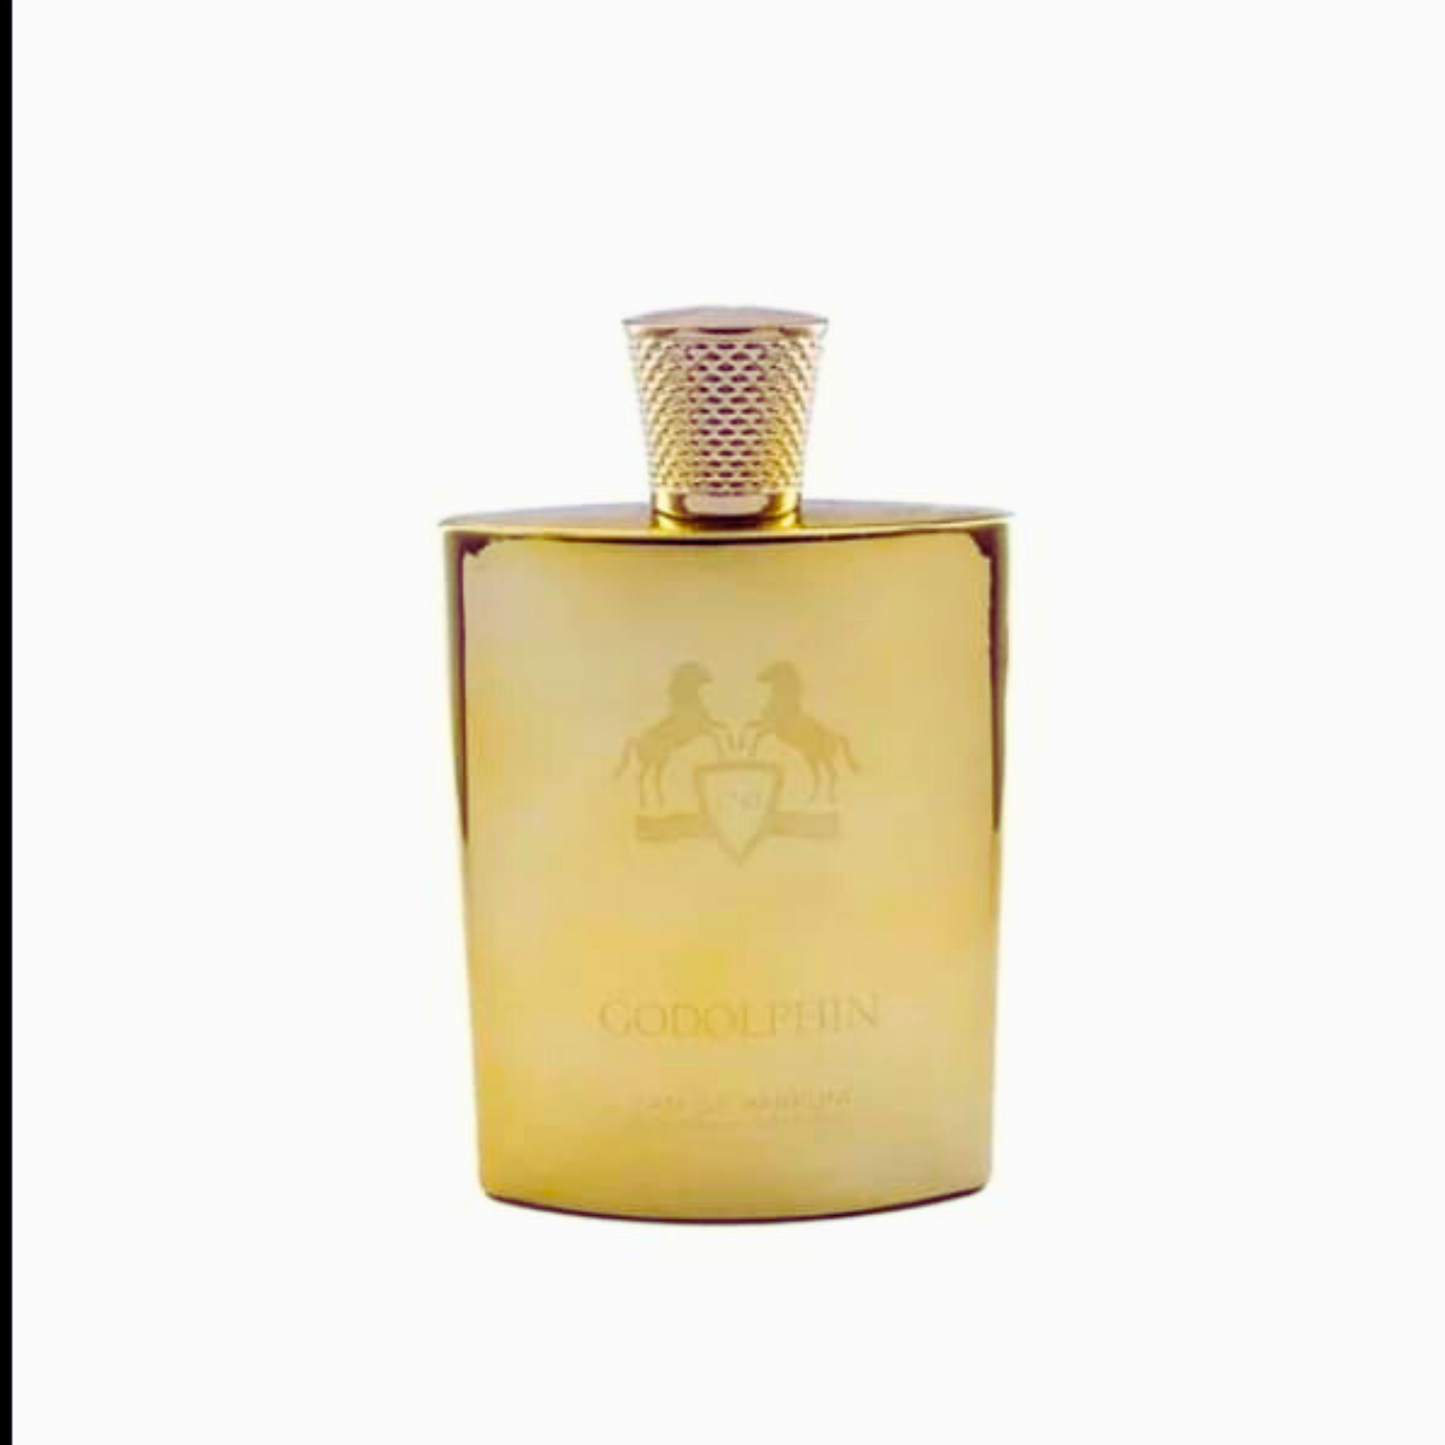 Godolphin ➔  Arabic perfume